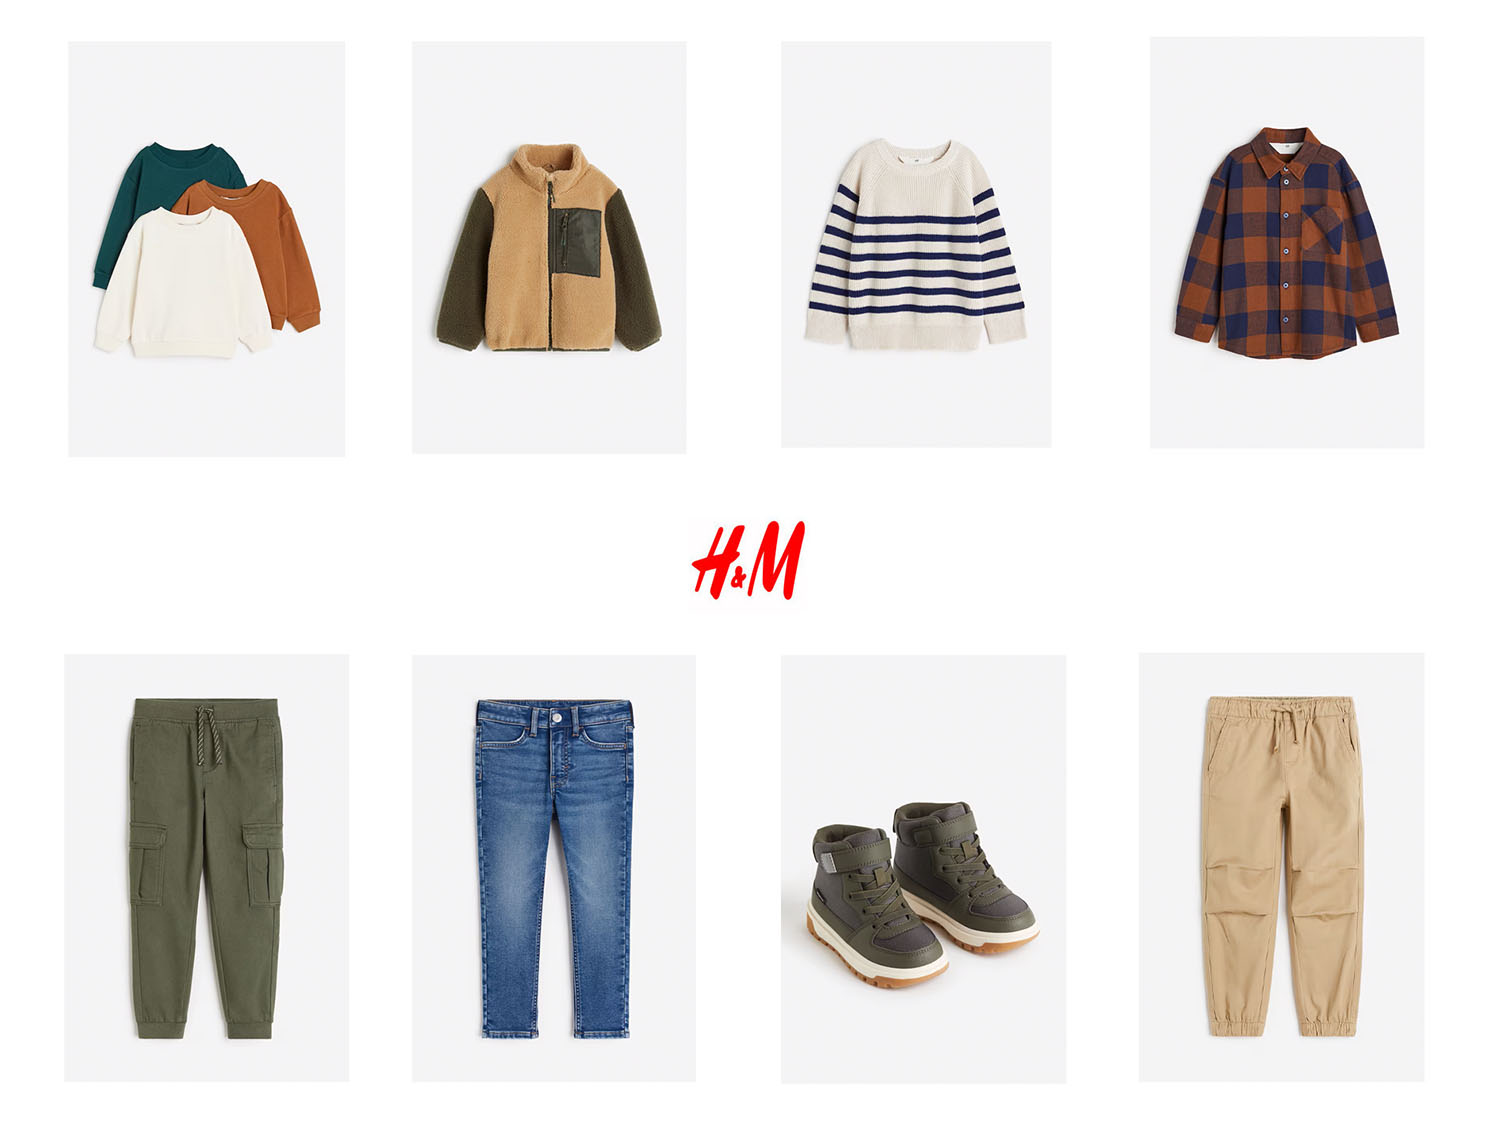 H&M boys autumn clothing collage